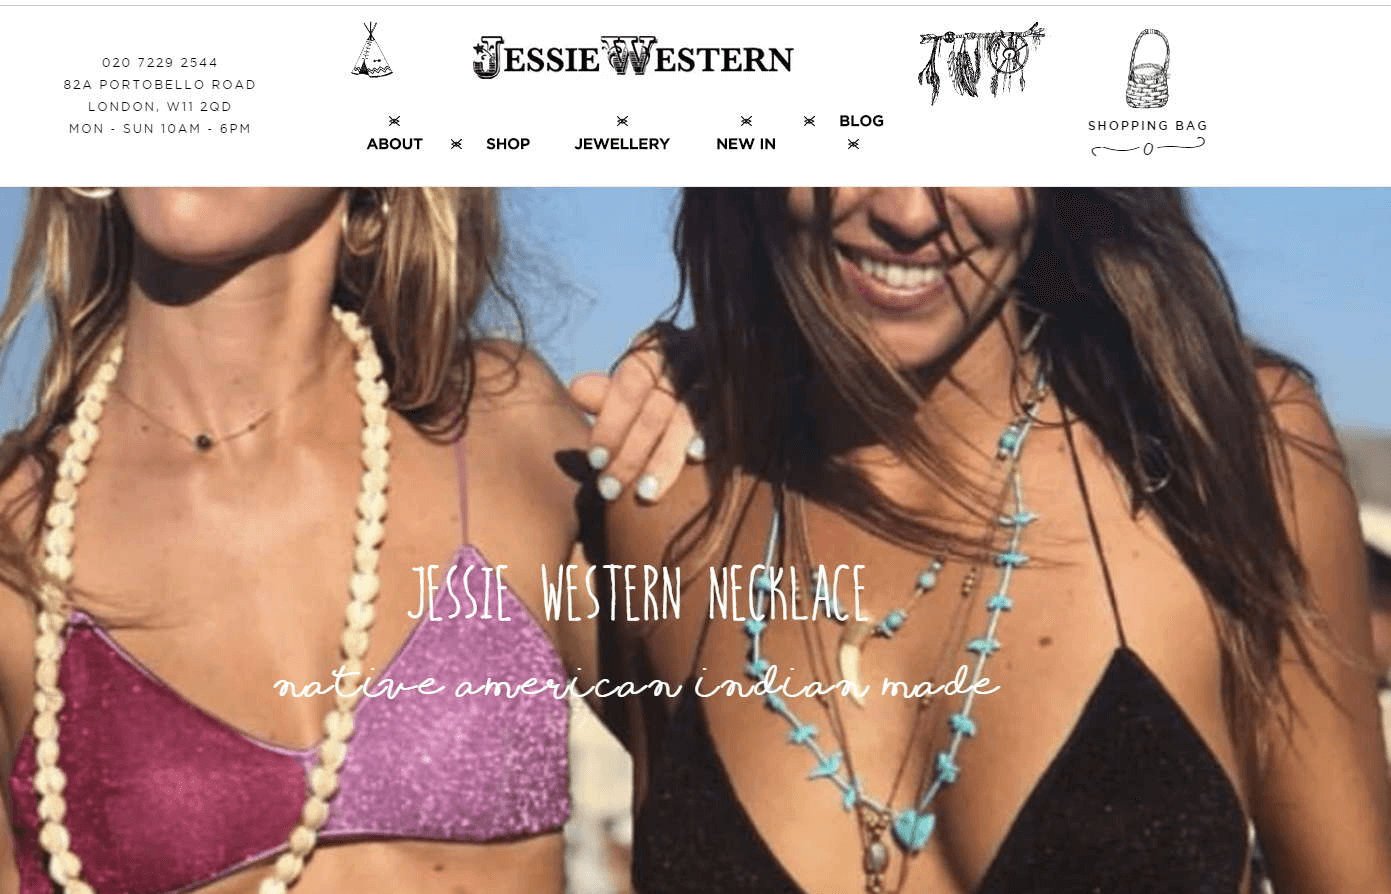 Jessie Western美国官网-jessiewestern 女装和珠宝品牌